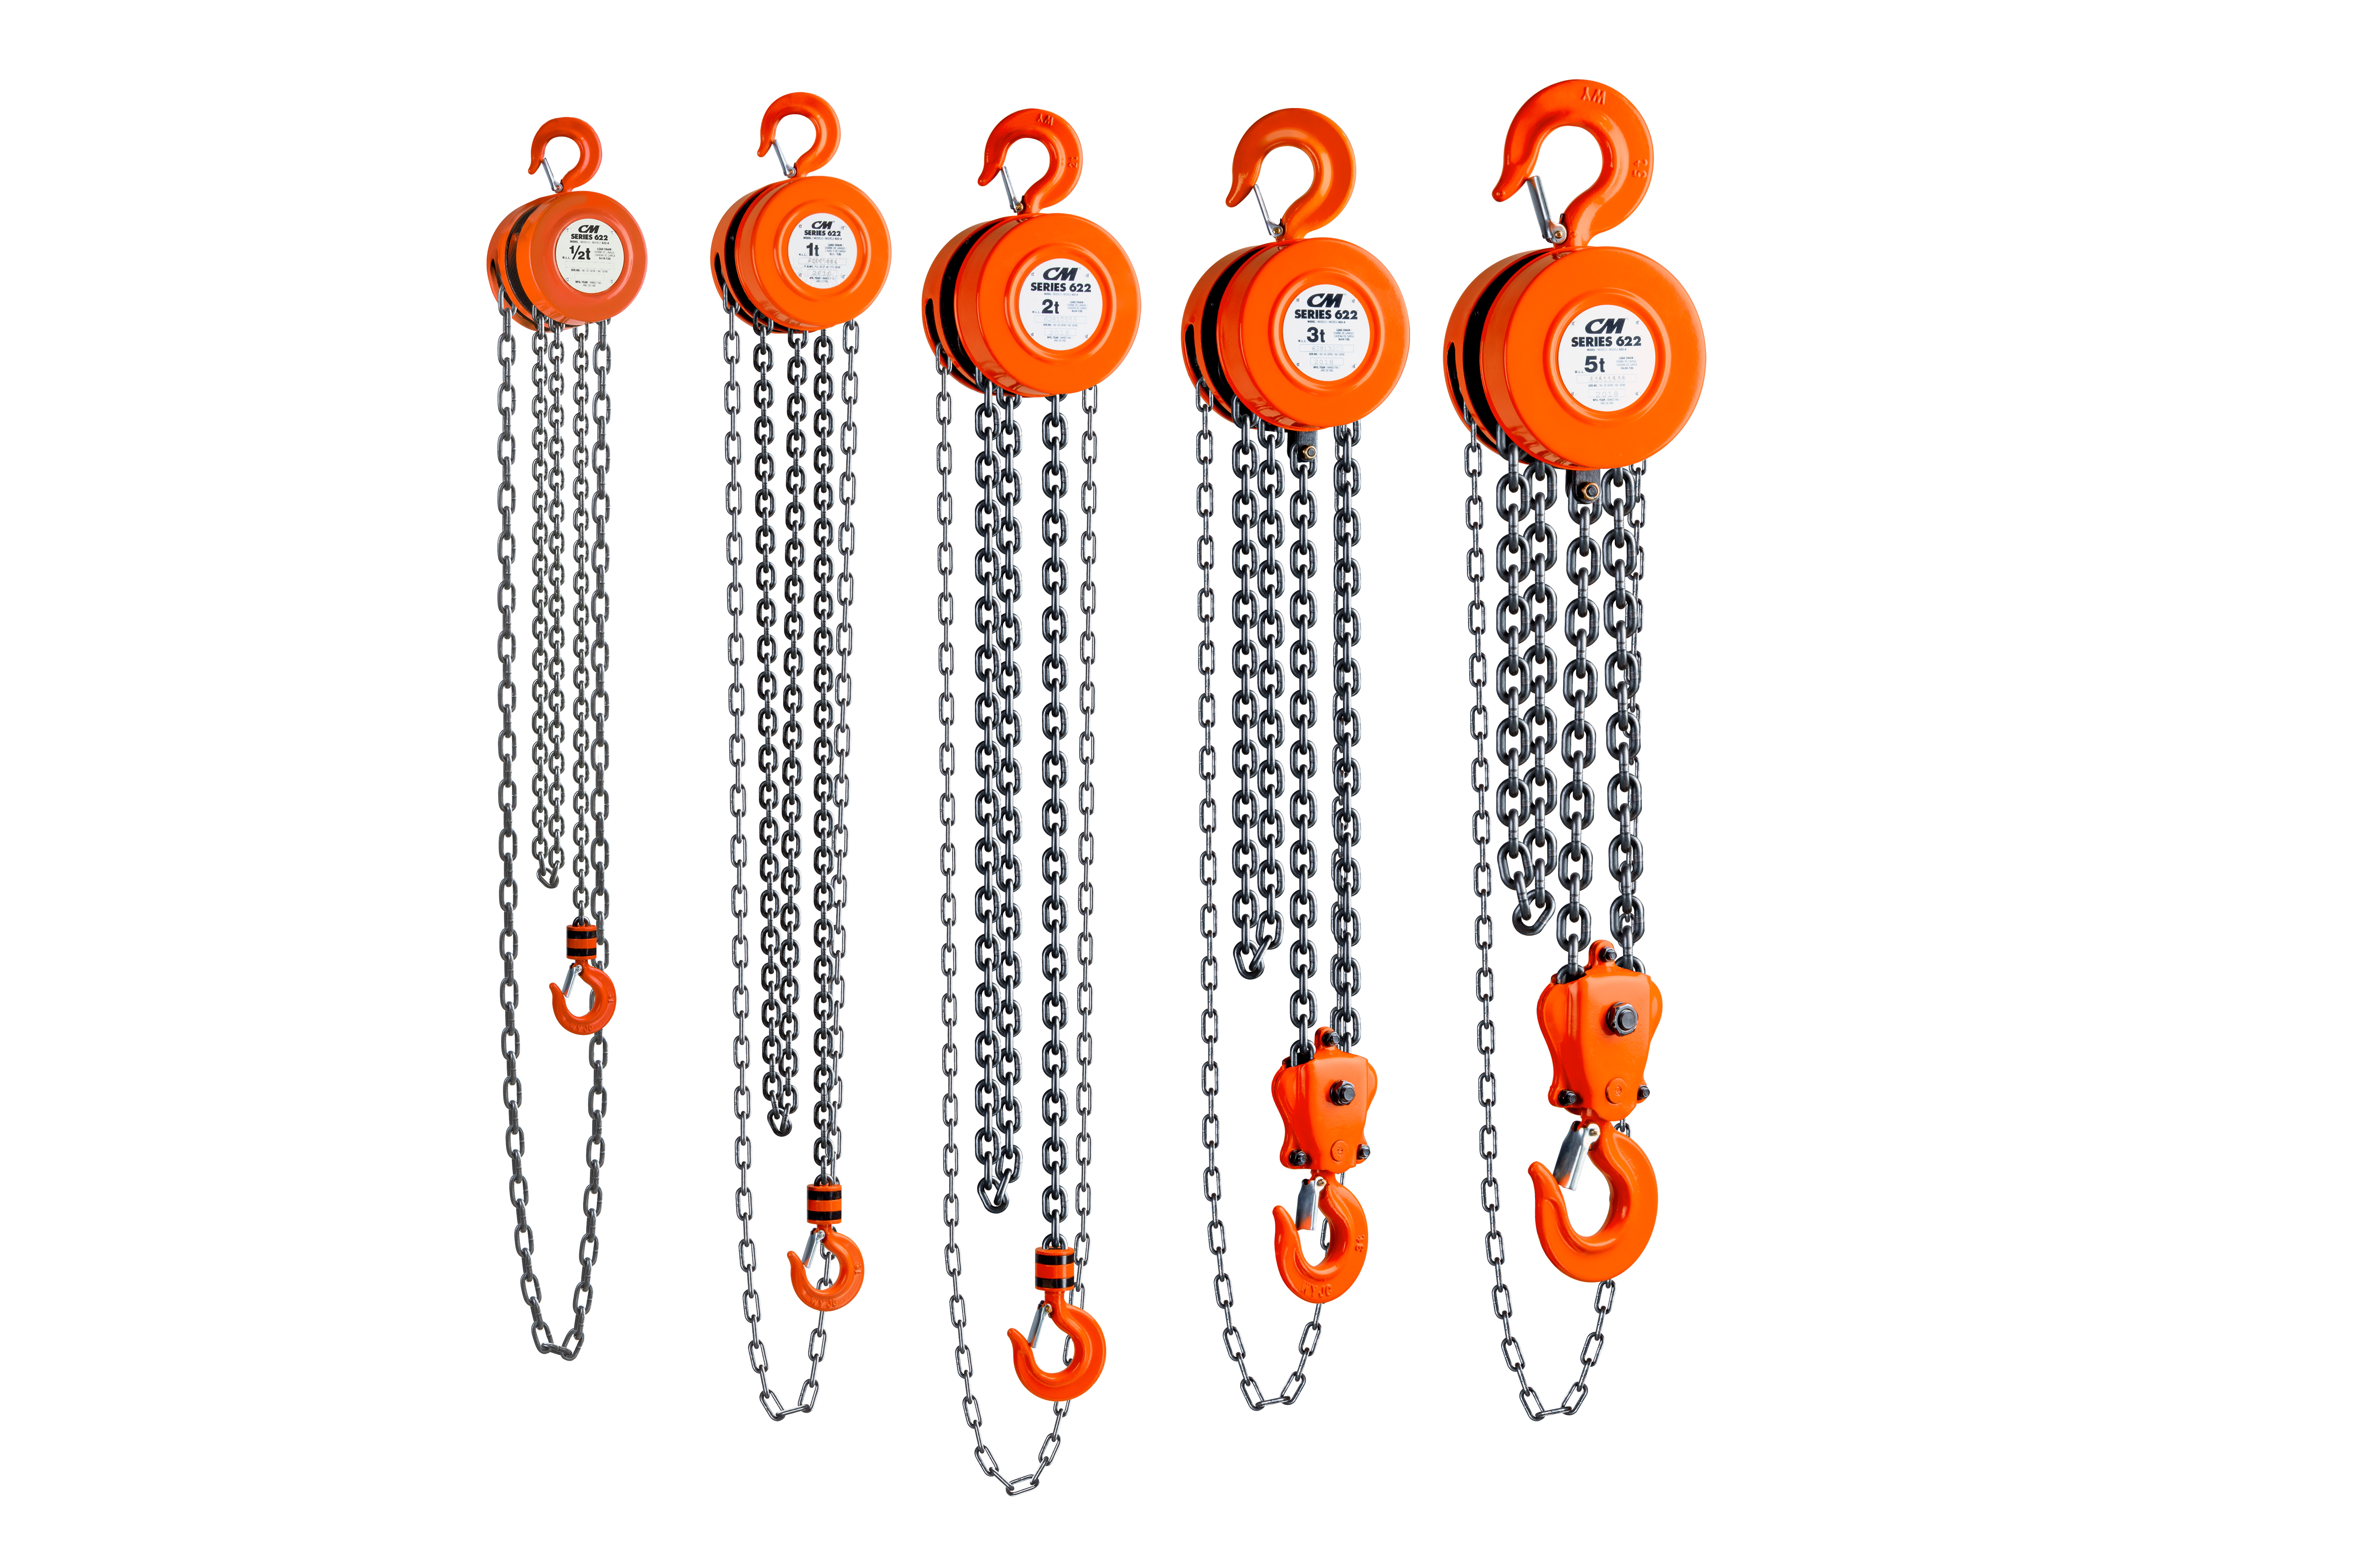 CM 622 hand chain hoist lineup of all capacities